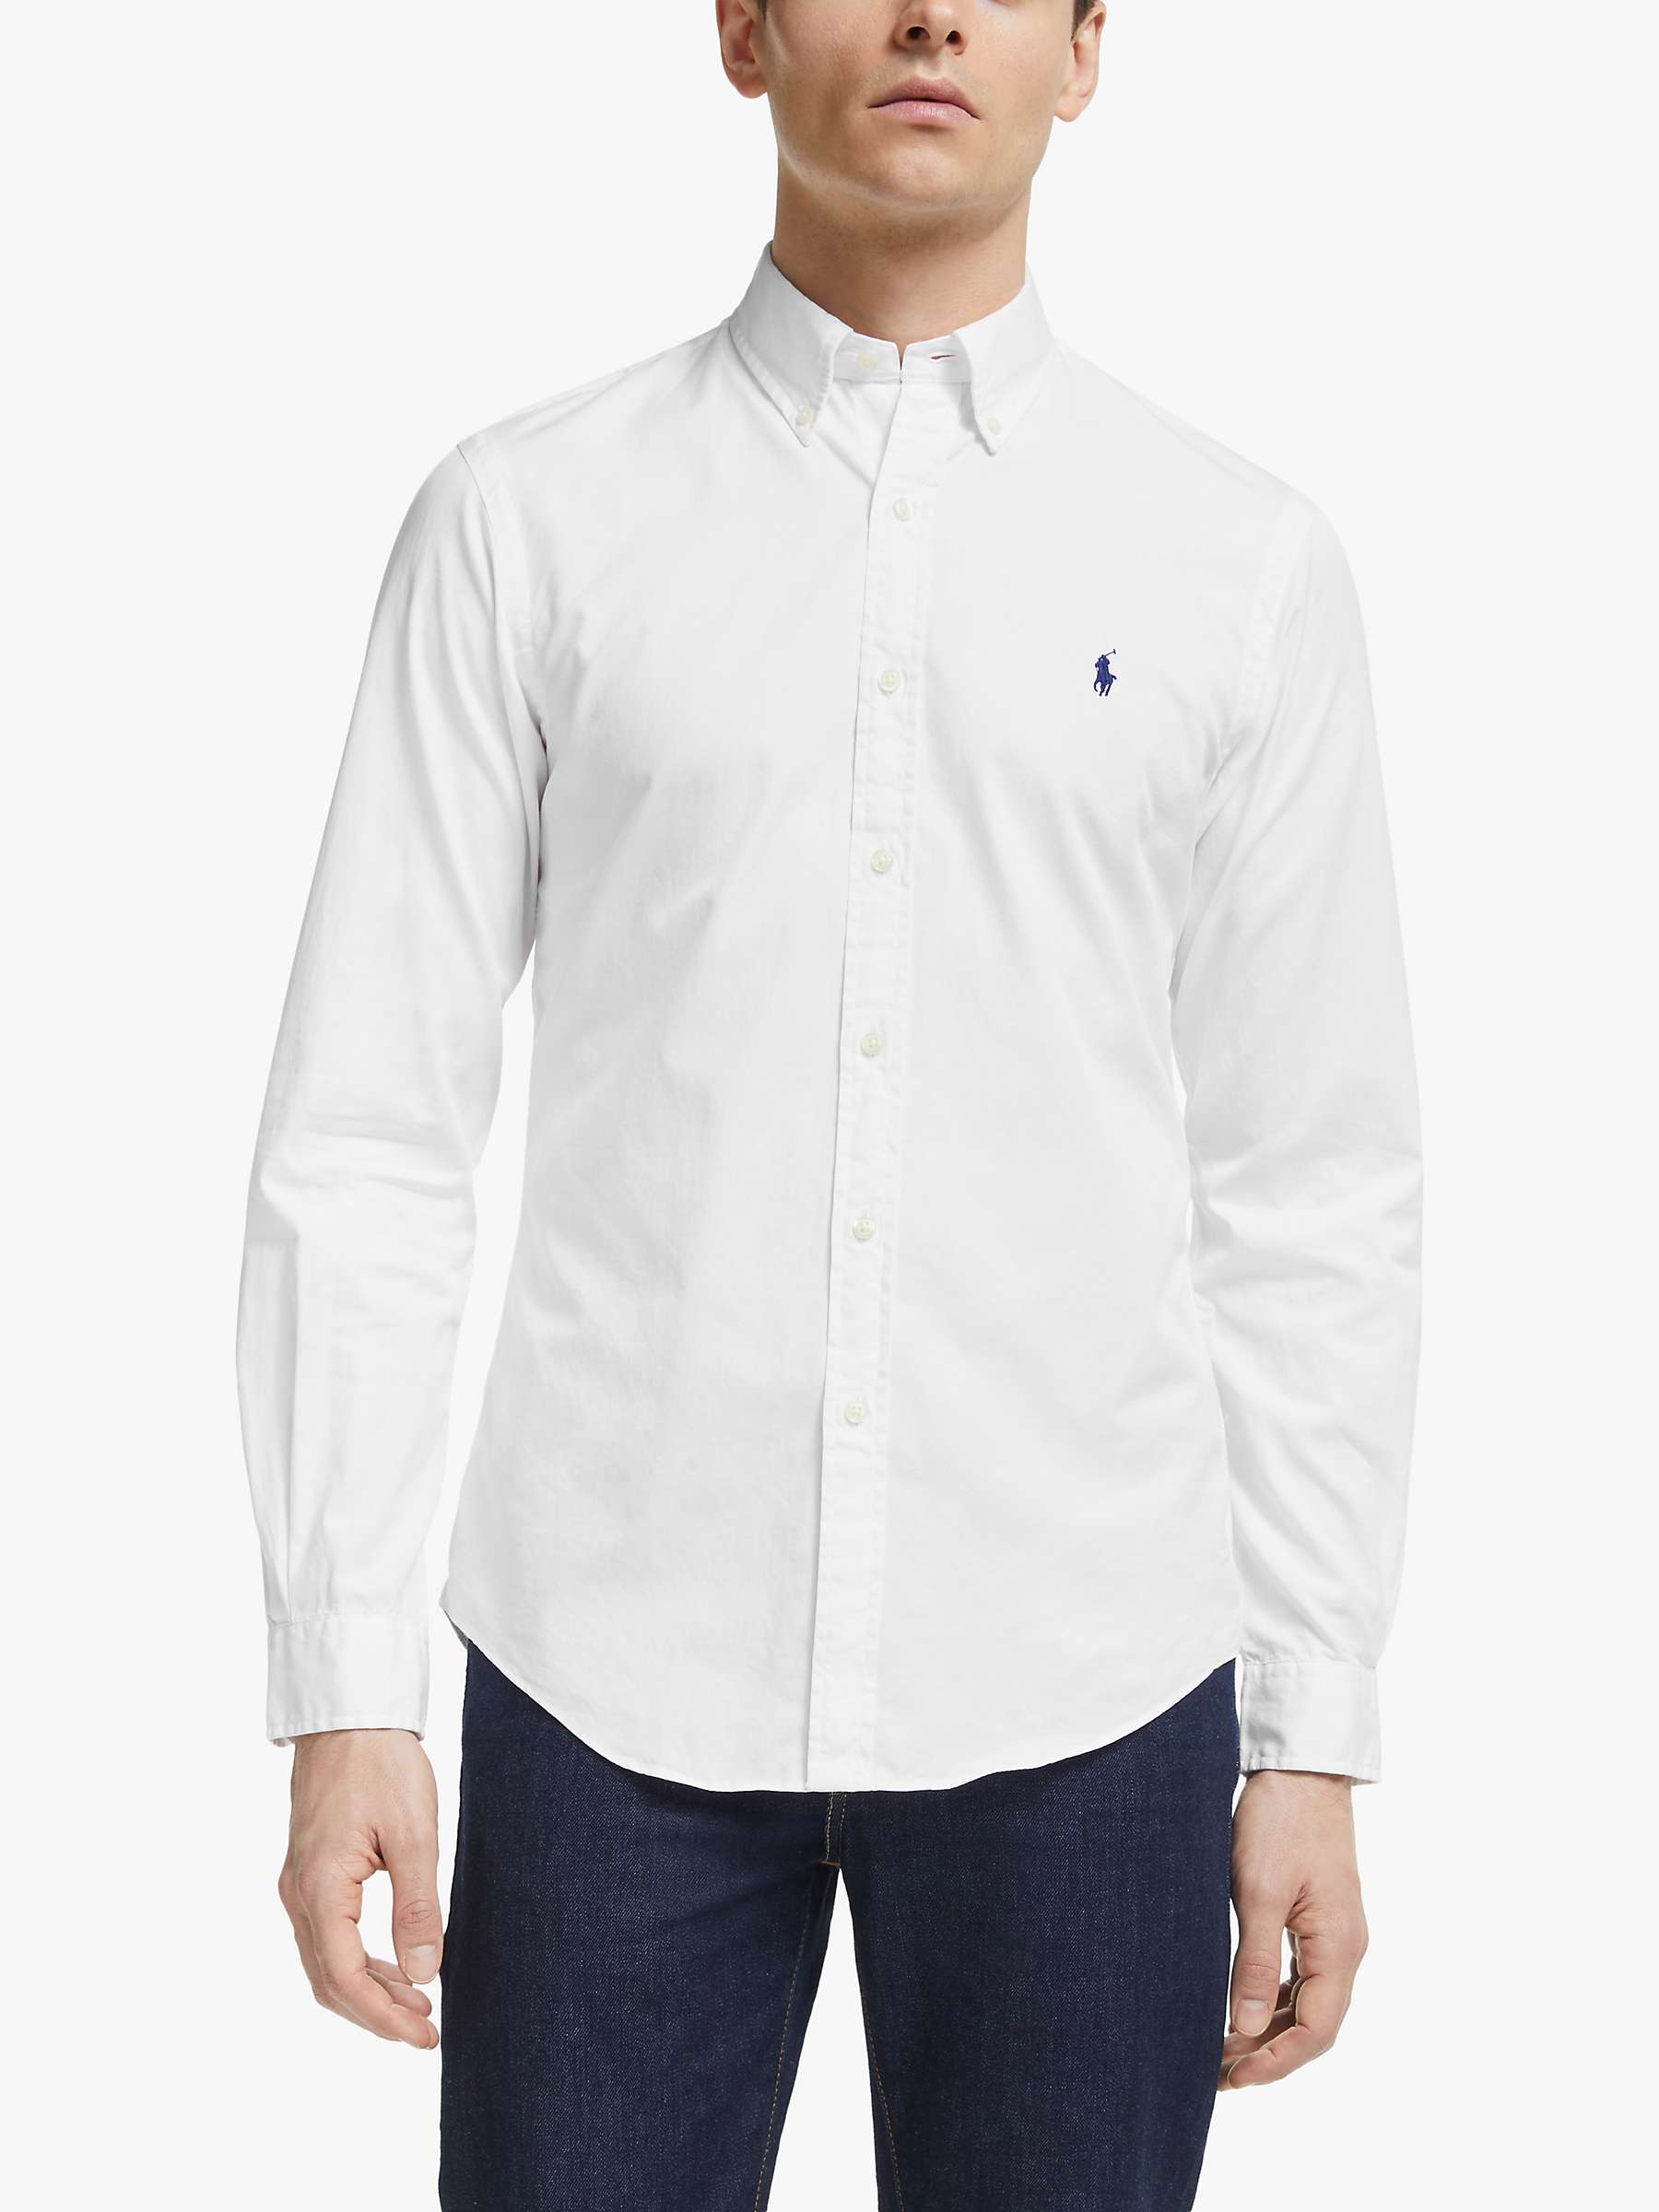 Polo Ralph Lauren Oxford Shirt, White at John Lewis & Partners